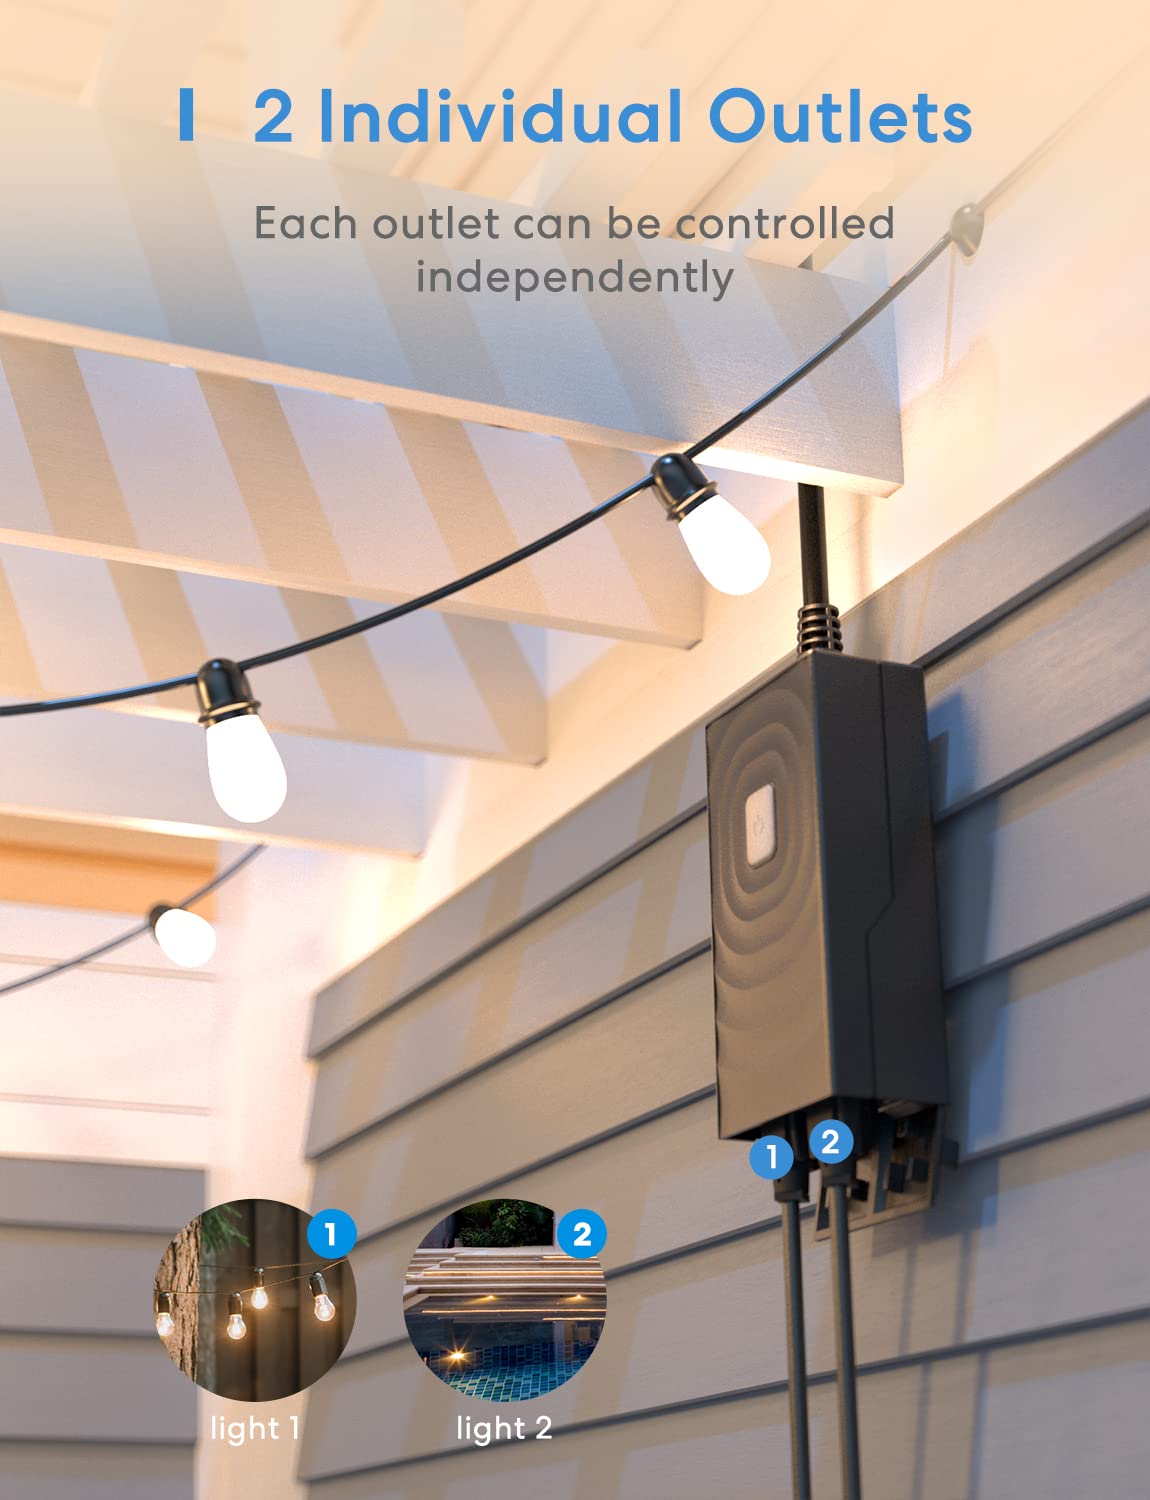 Meross Outdoor Smart Plug Works with HomeKit, Siri,  Alexa